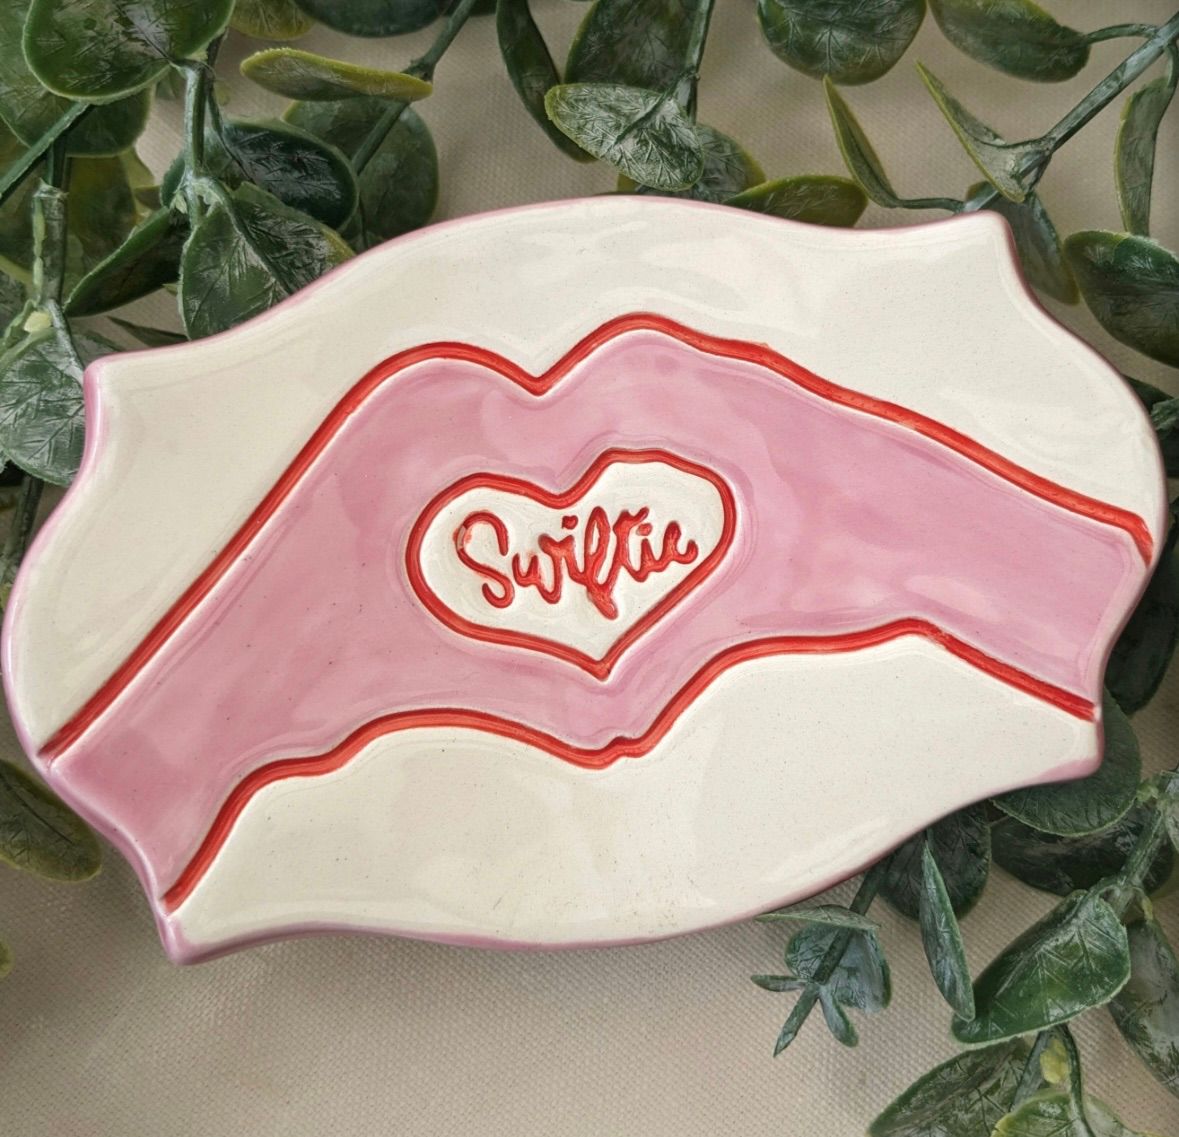 Swiftie Evening - Pottery Version